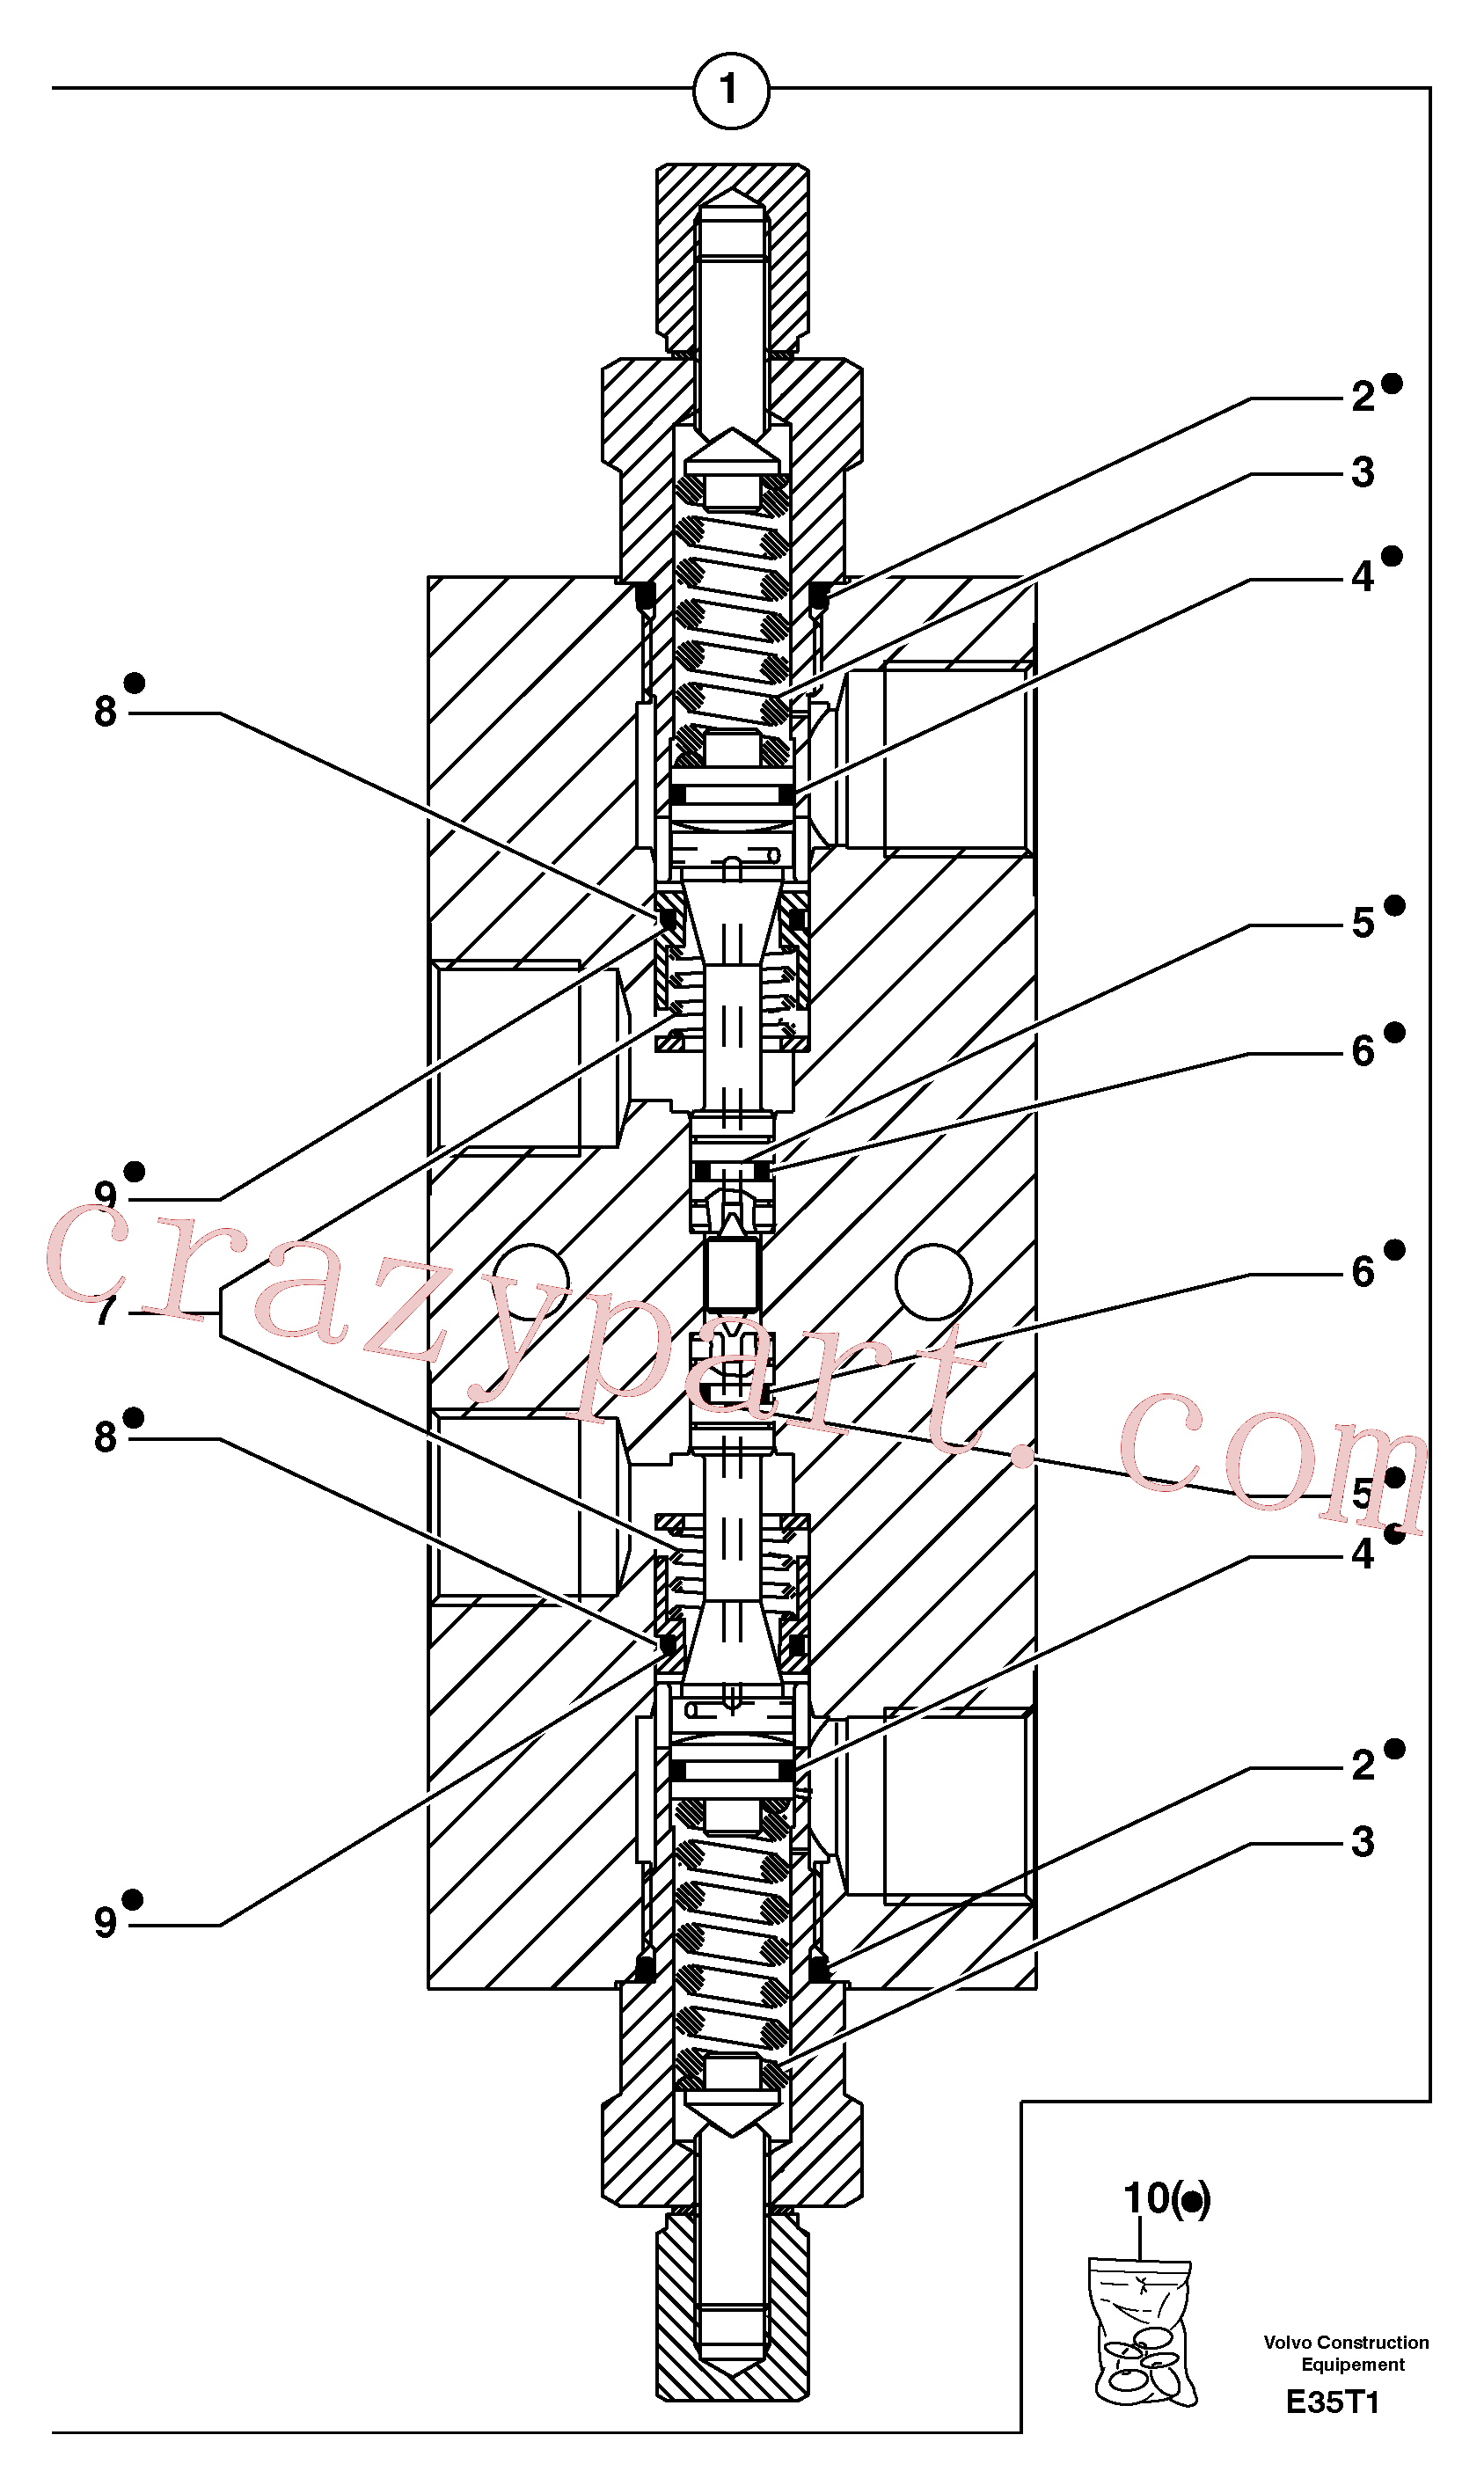 PJ7417415 for Volvo Balancing valve ( offset cylinder )(E35T1 assembly)